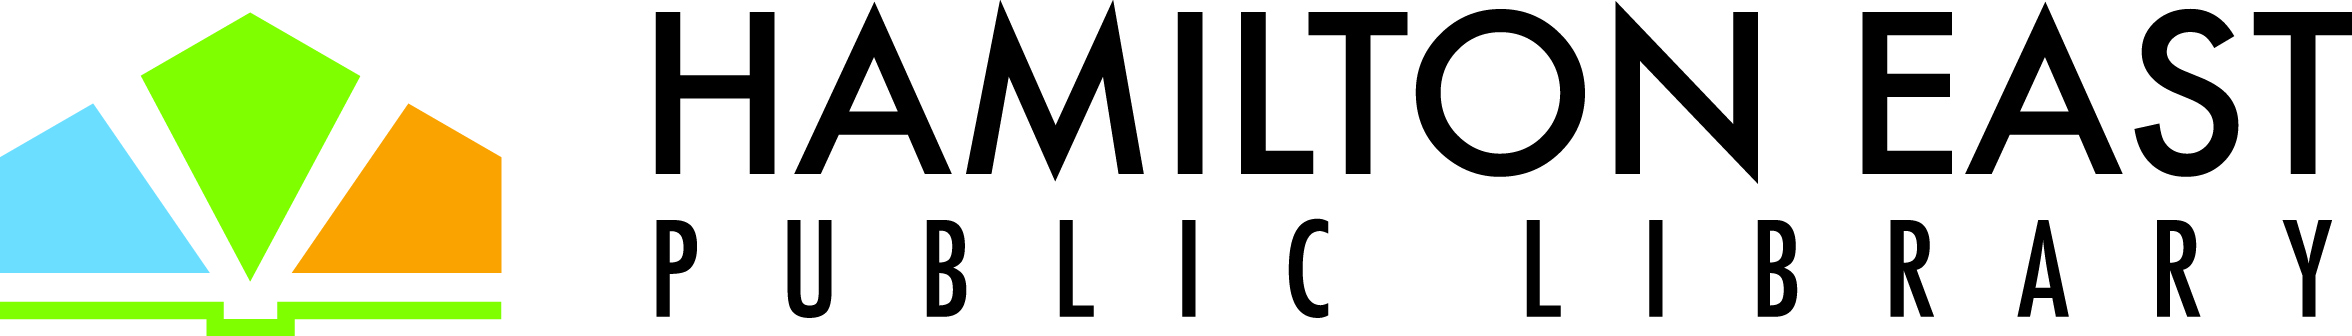 Hamilton East Public Library logo